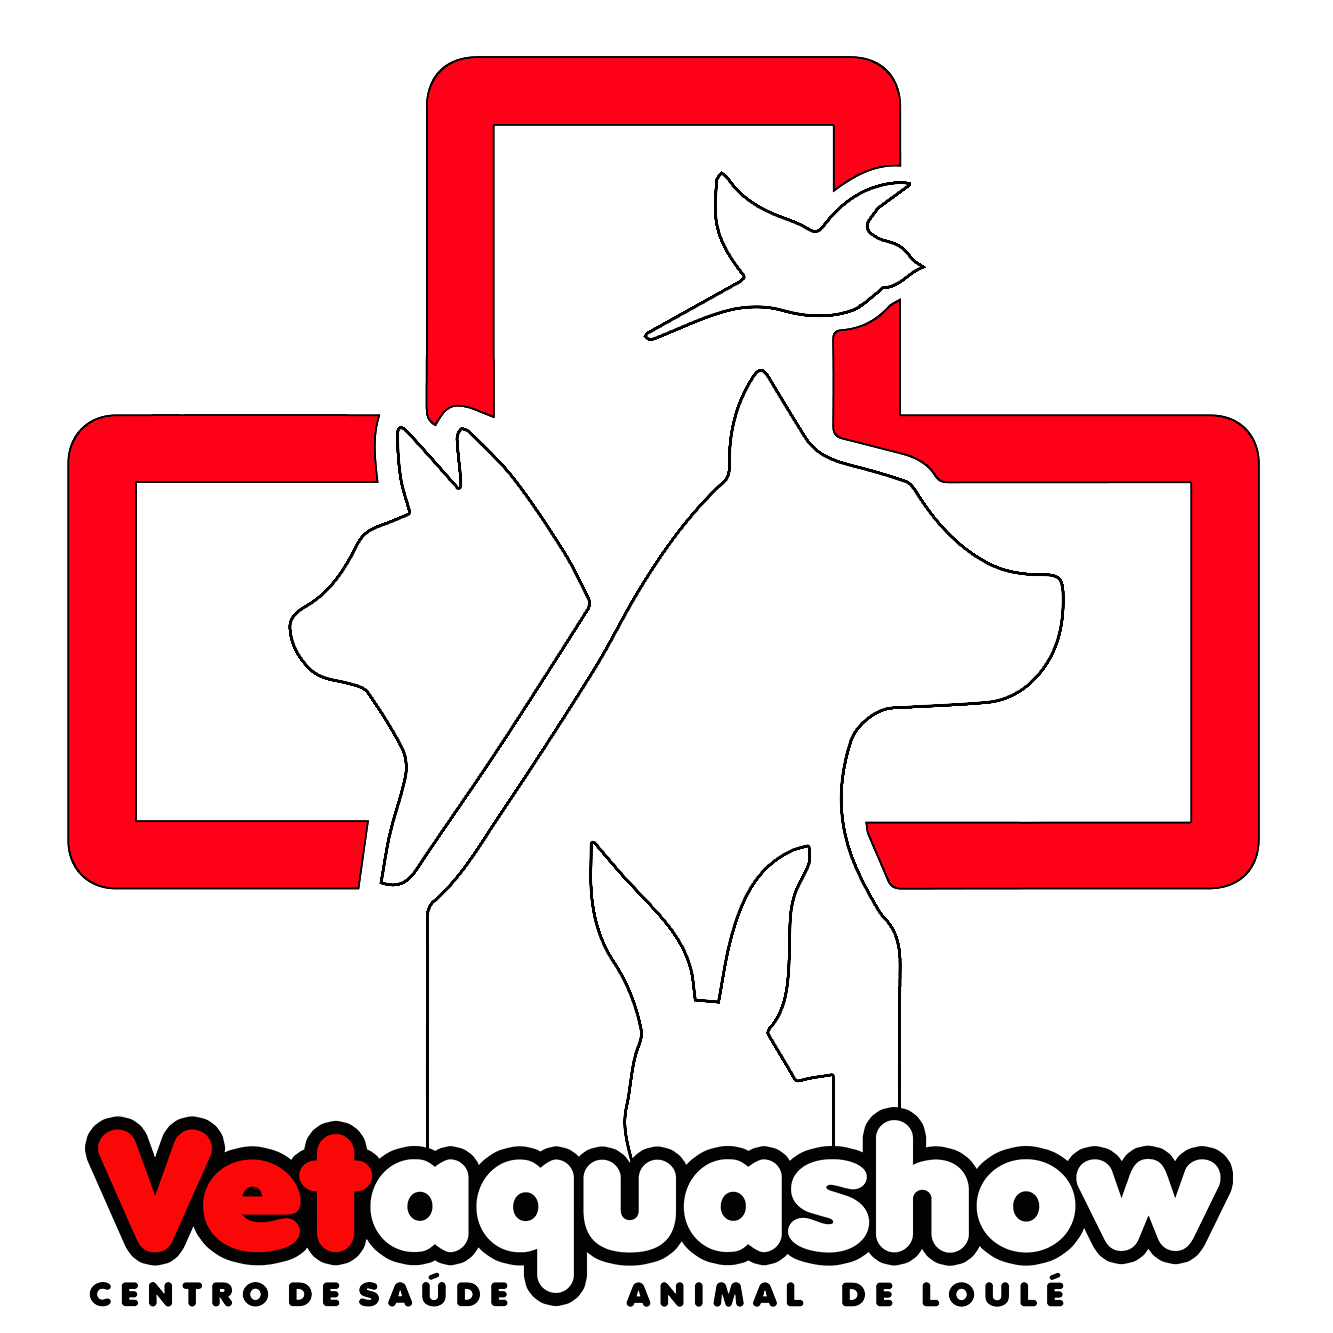 Vetaquashow C. de Saúde Animal